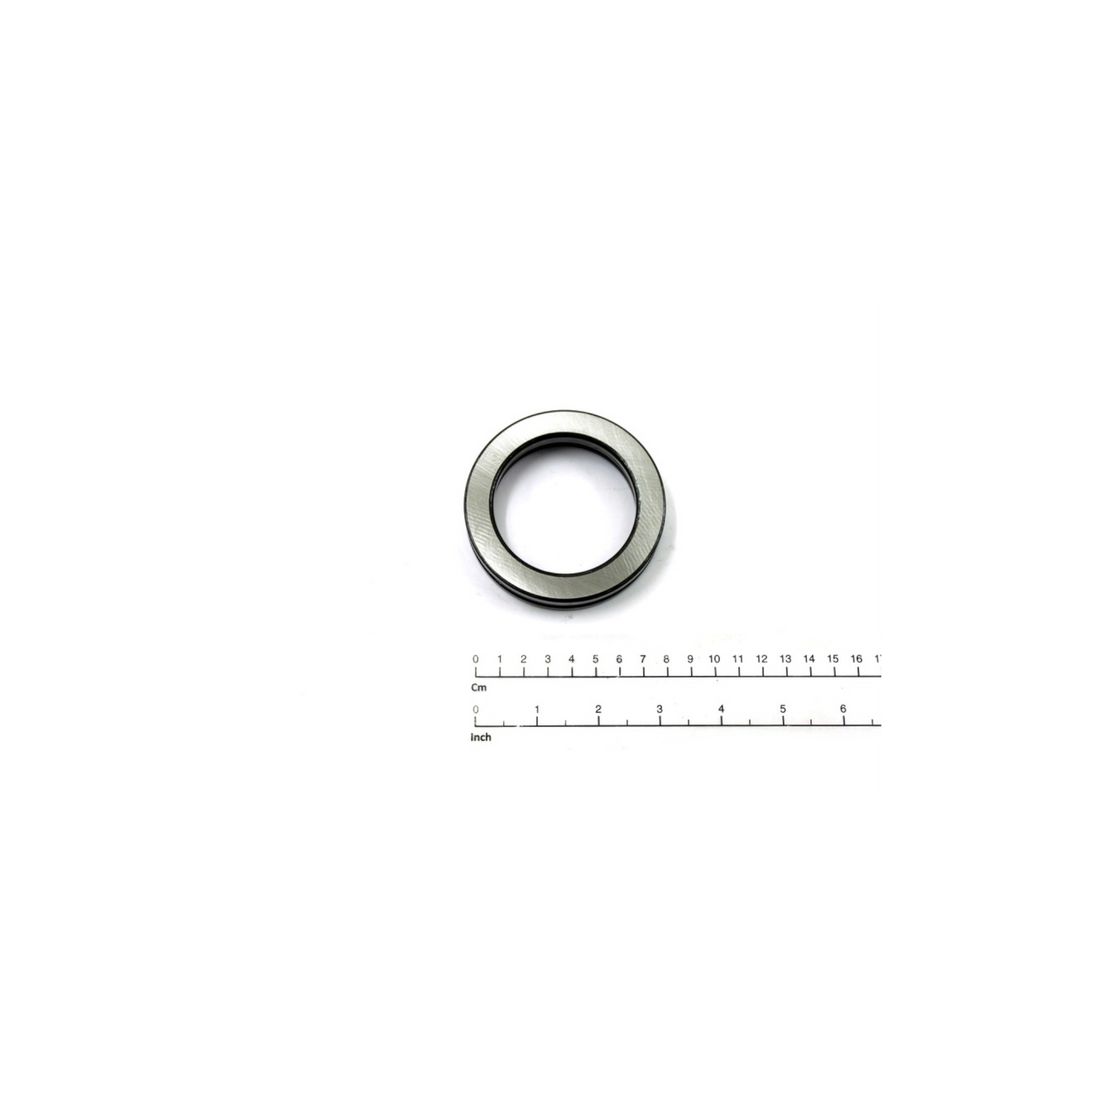 R&M Parts - Bearing Thrust Ball Bearing, Part Number: 3000000924